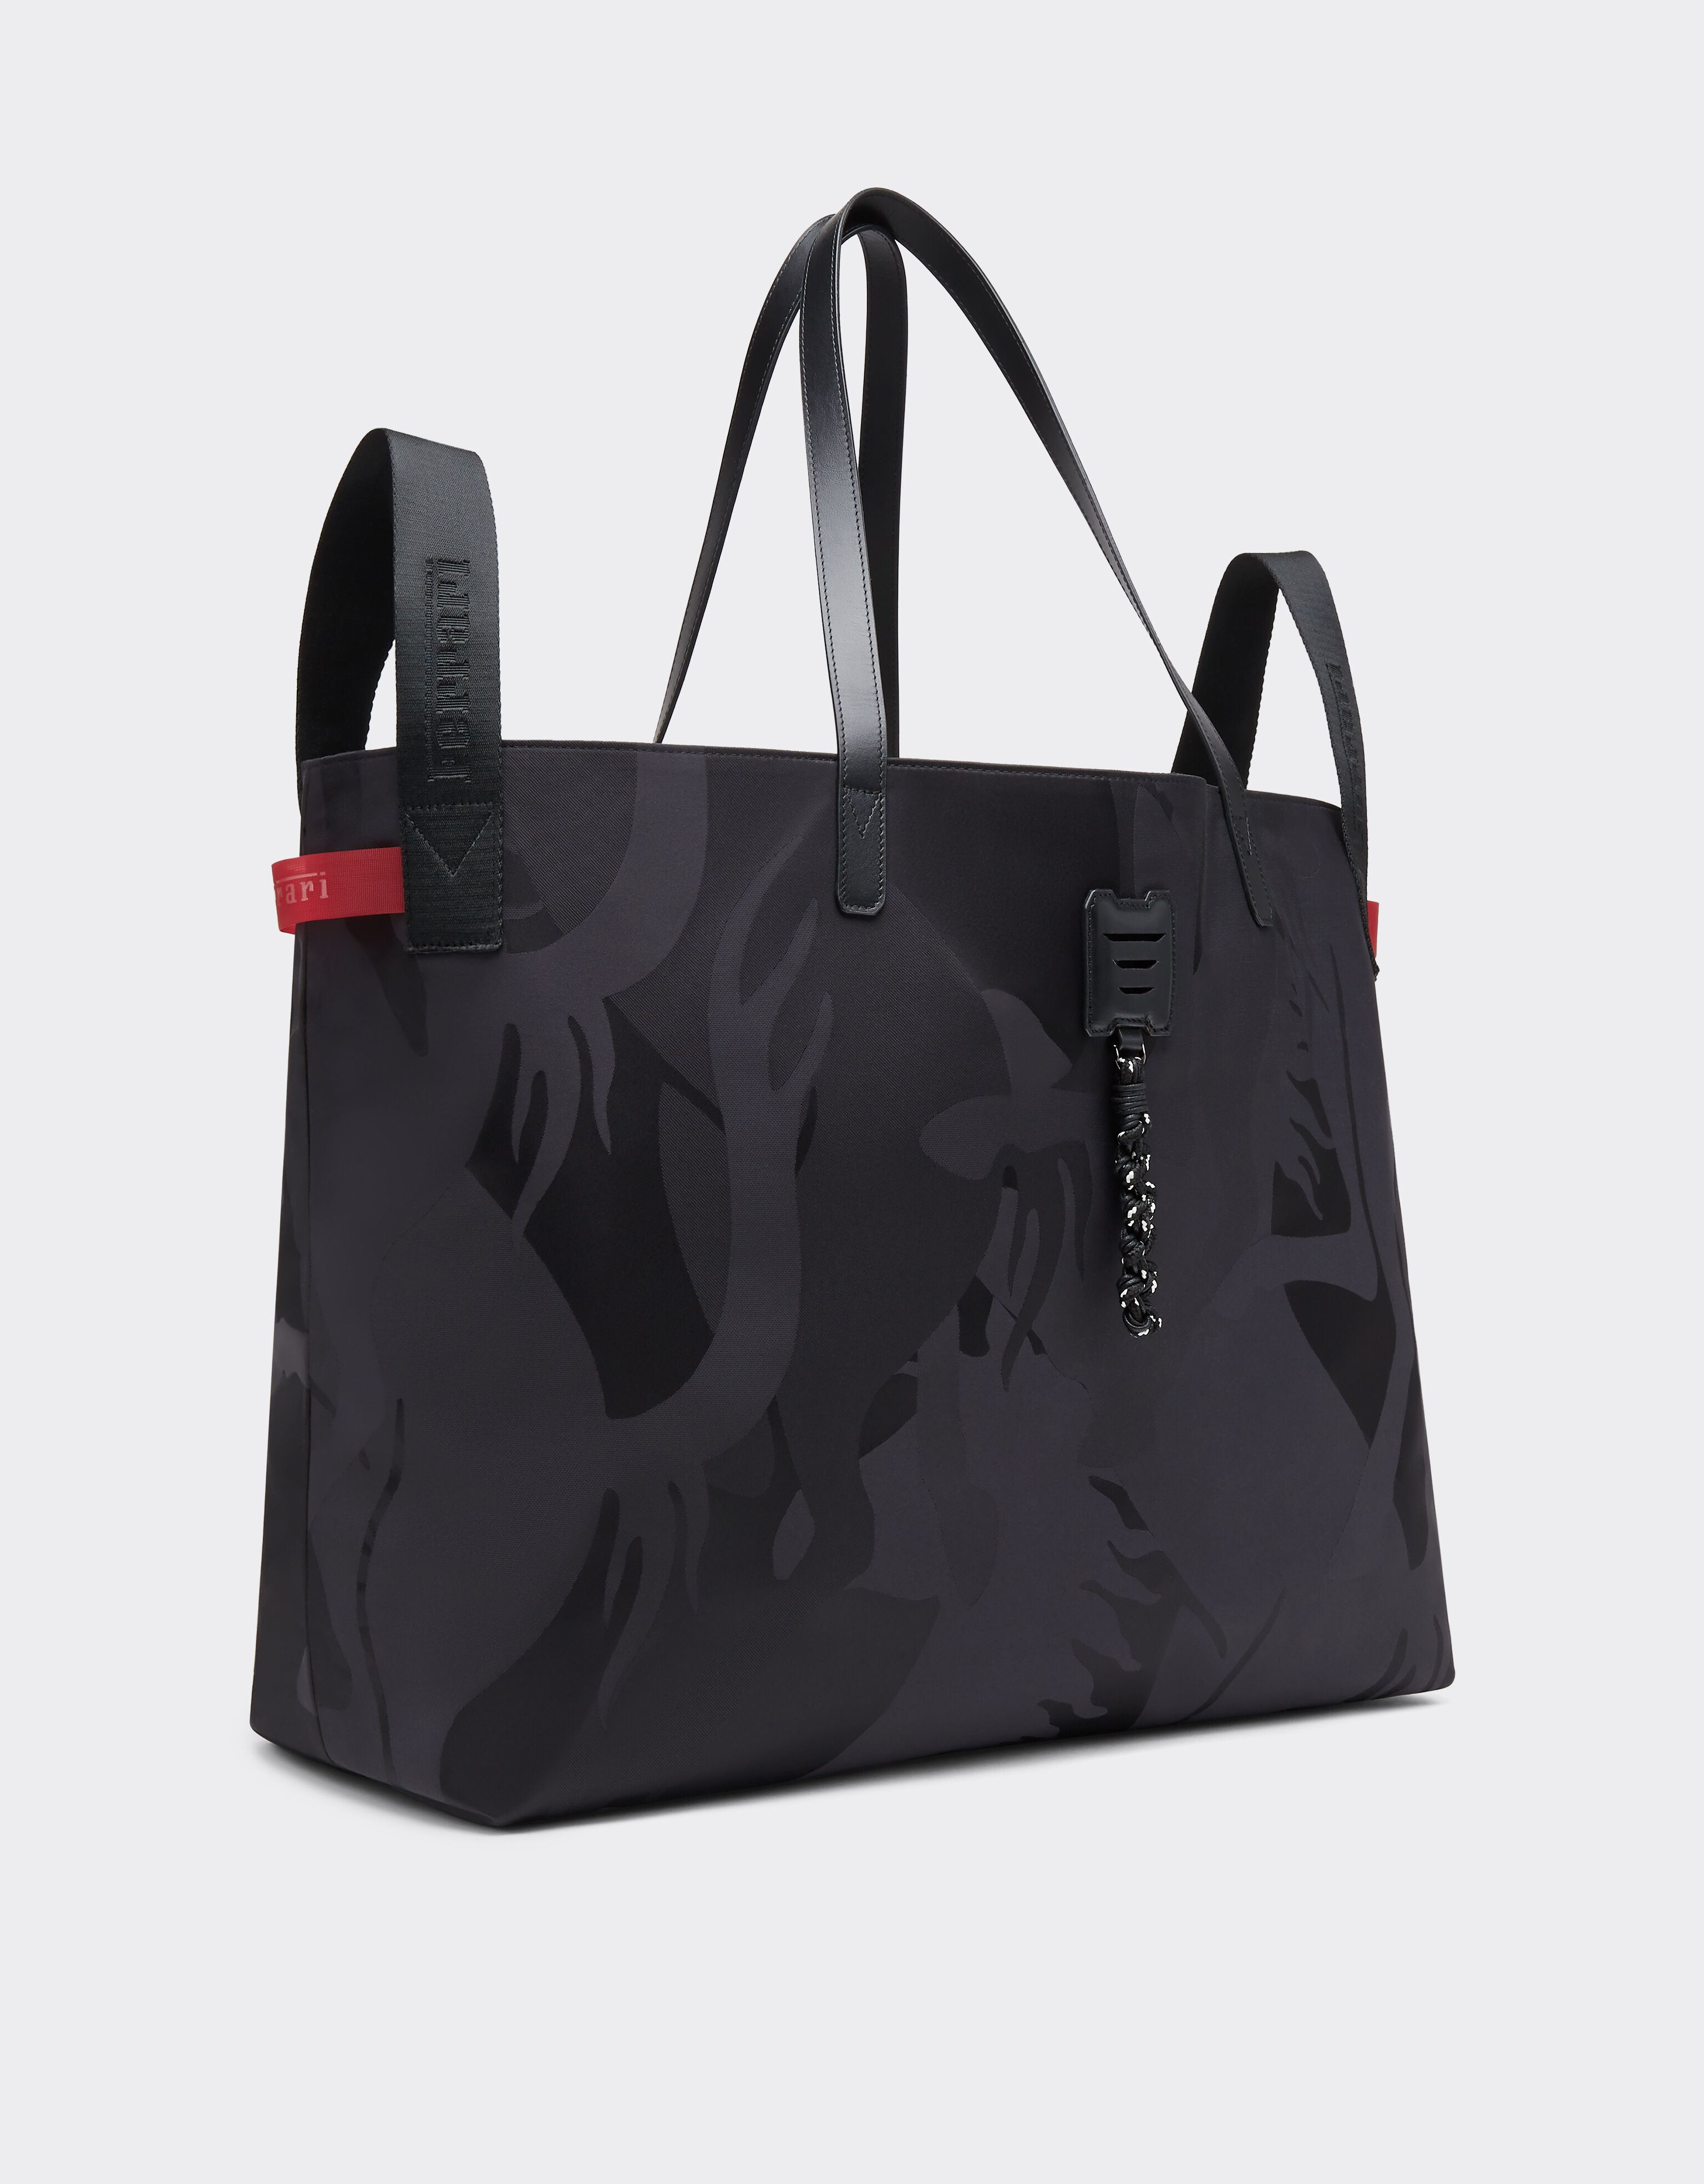 Ferrari Shopper bag in camouflage Prancing Horse nylon fabric Black 20587f